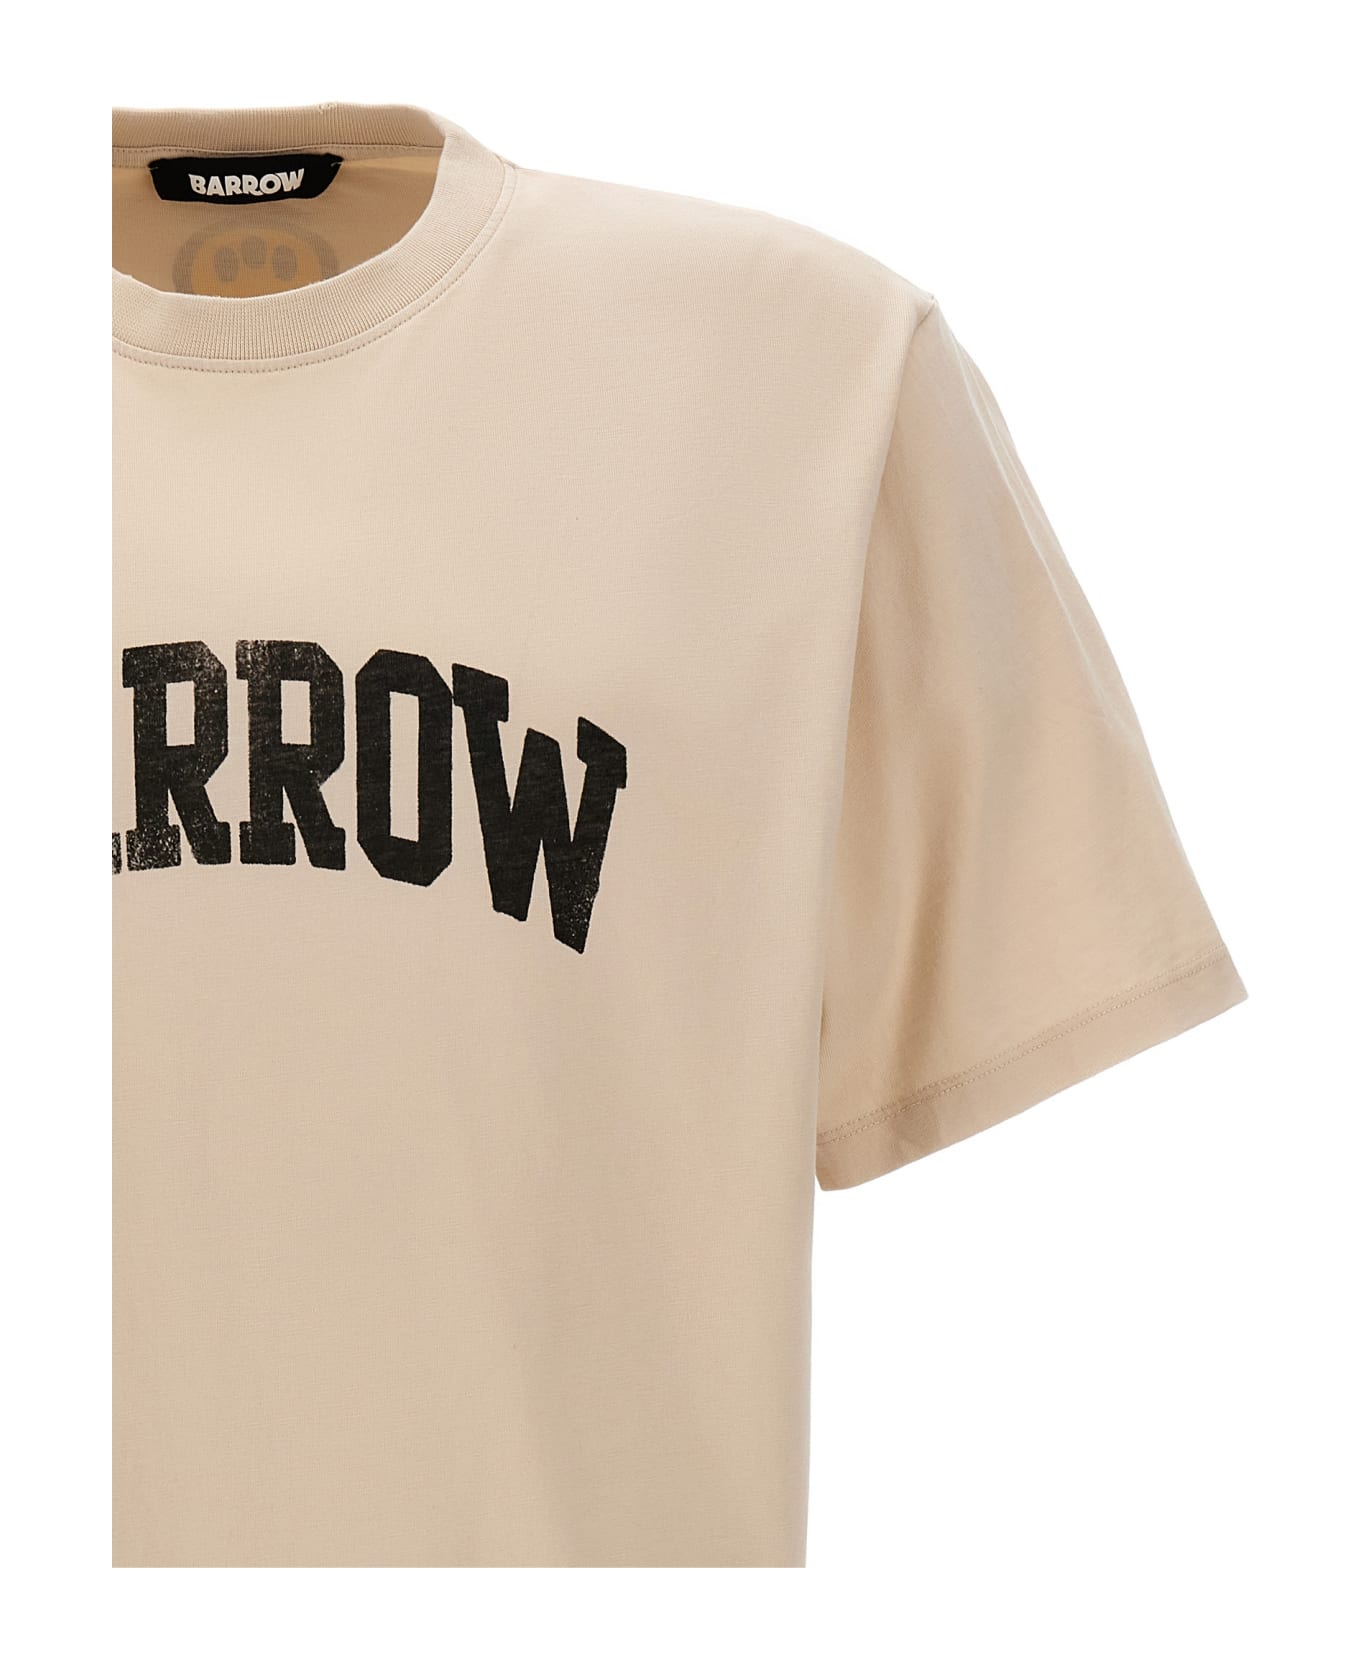 Barrow Logo Print T-shirt - Beige